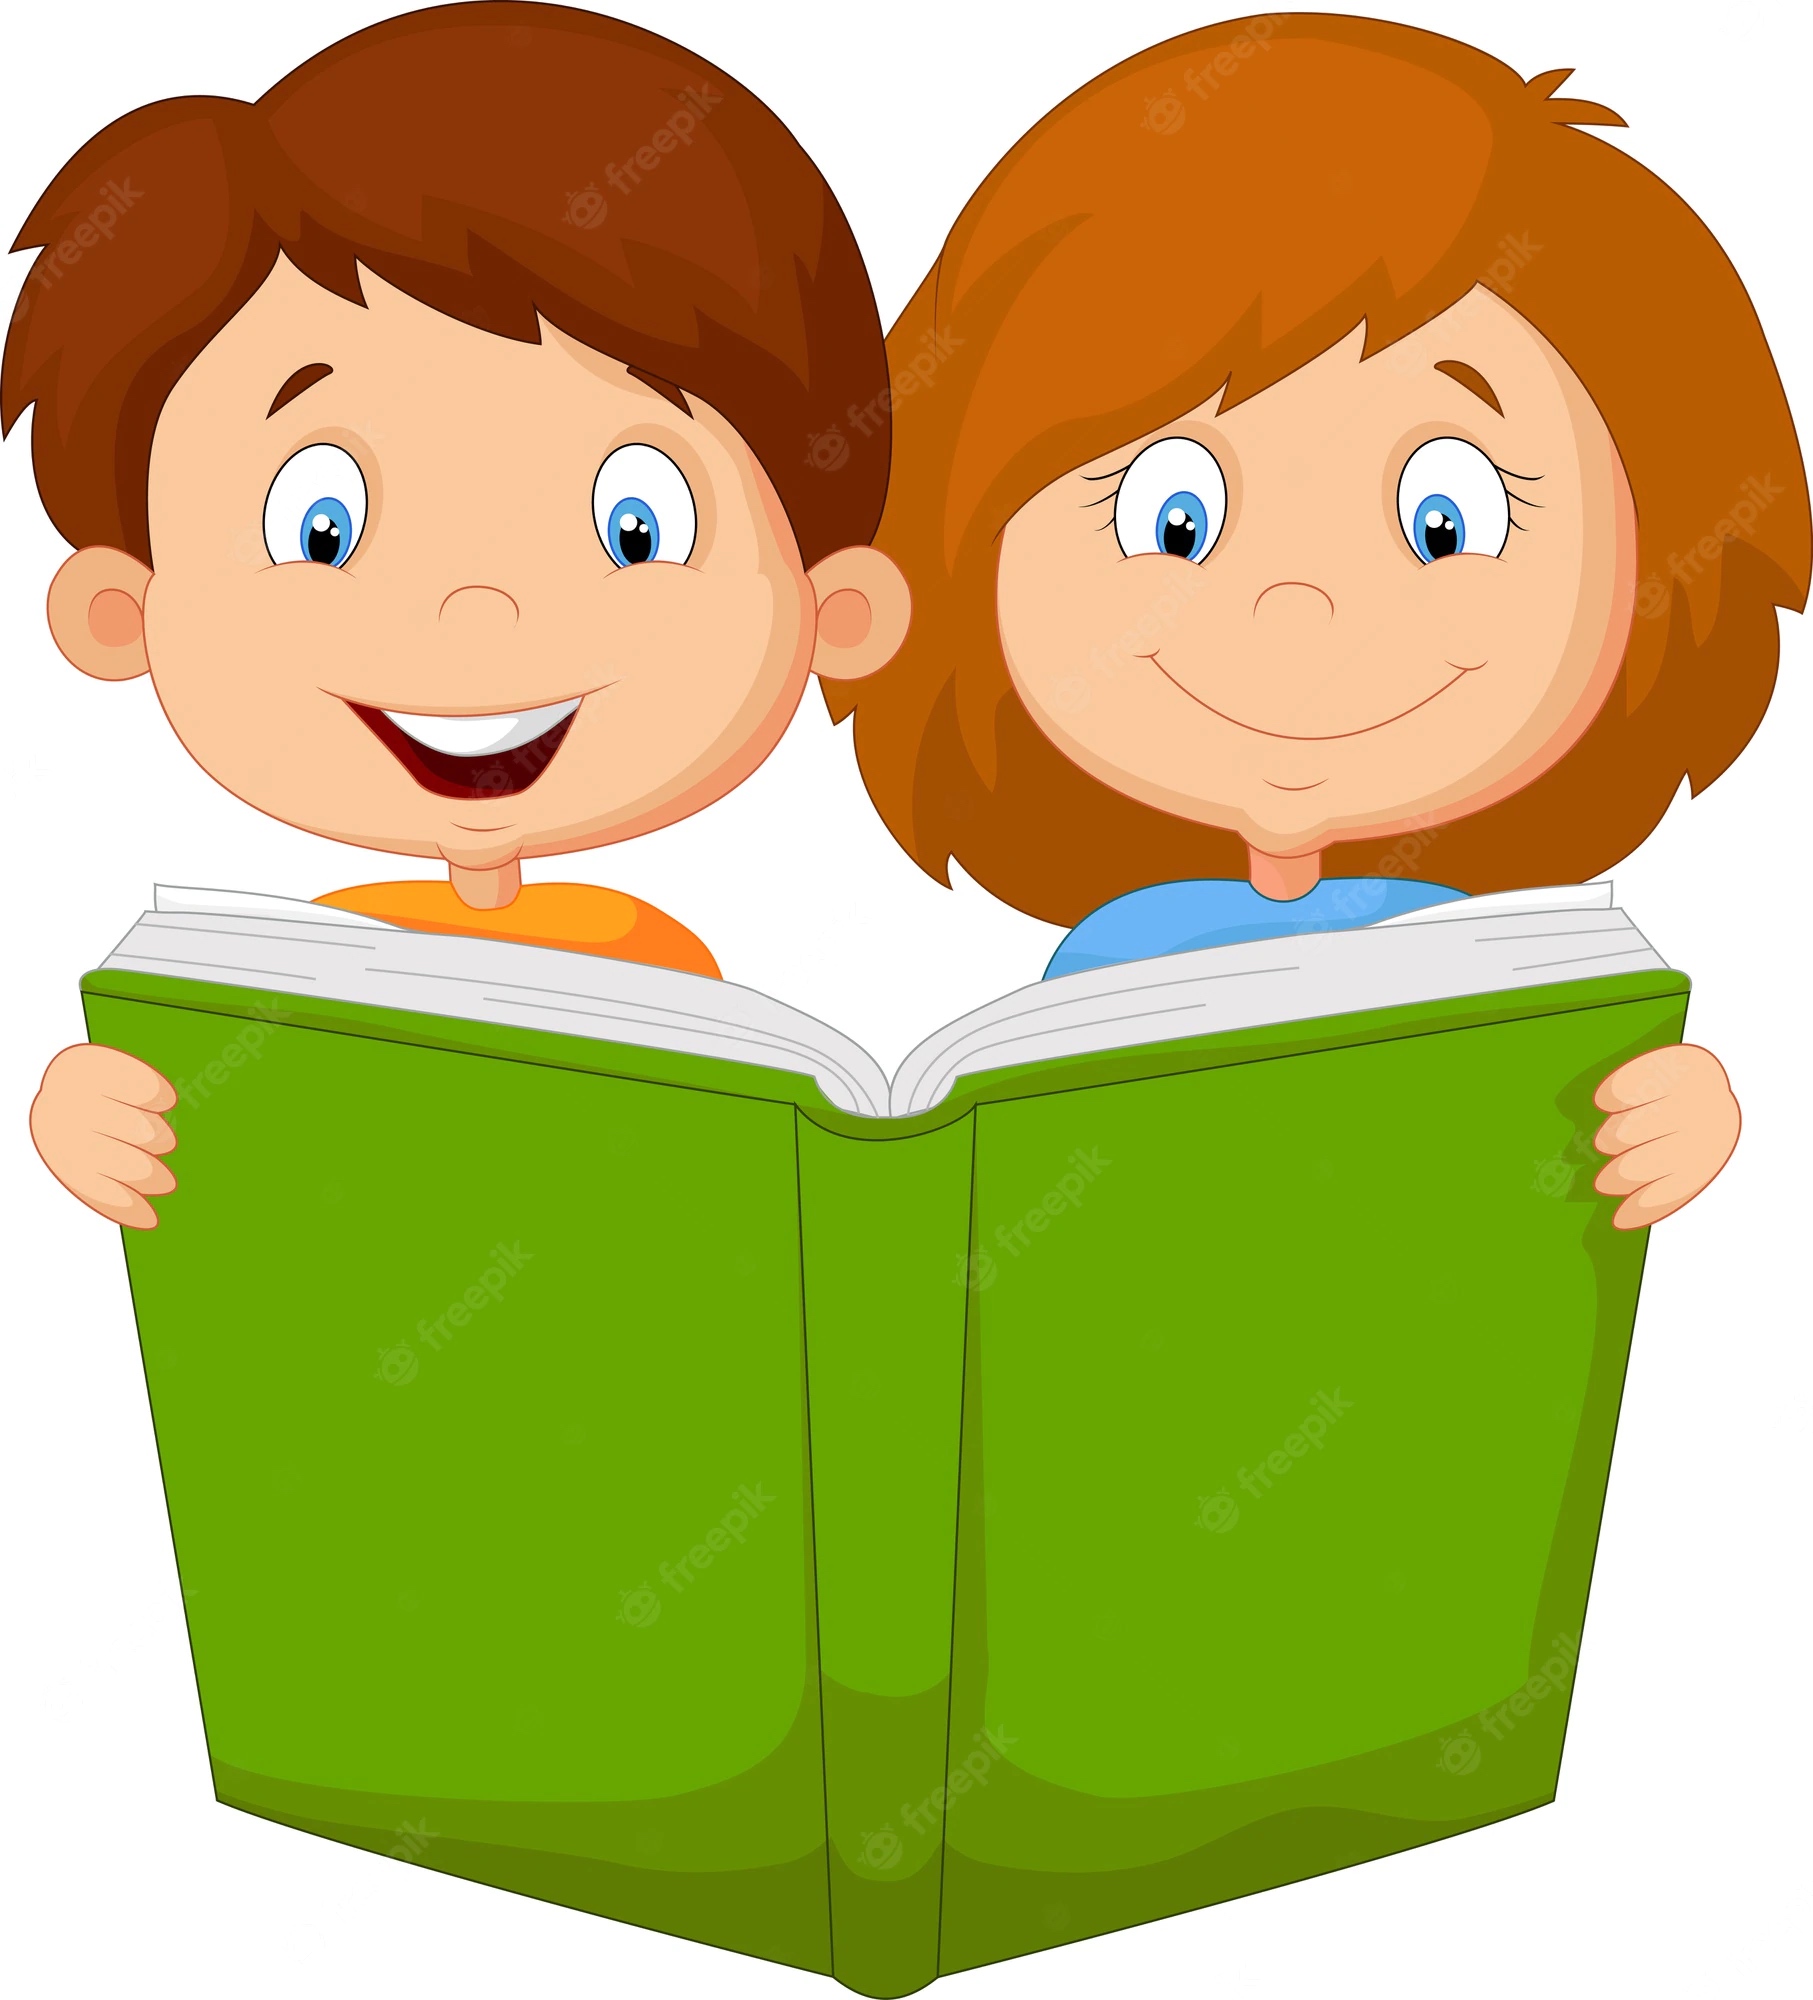 libro-lectura-nino-nina-dibujos-animados_29190-3884